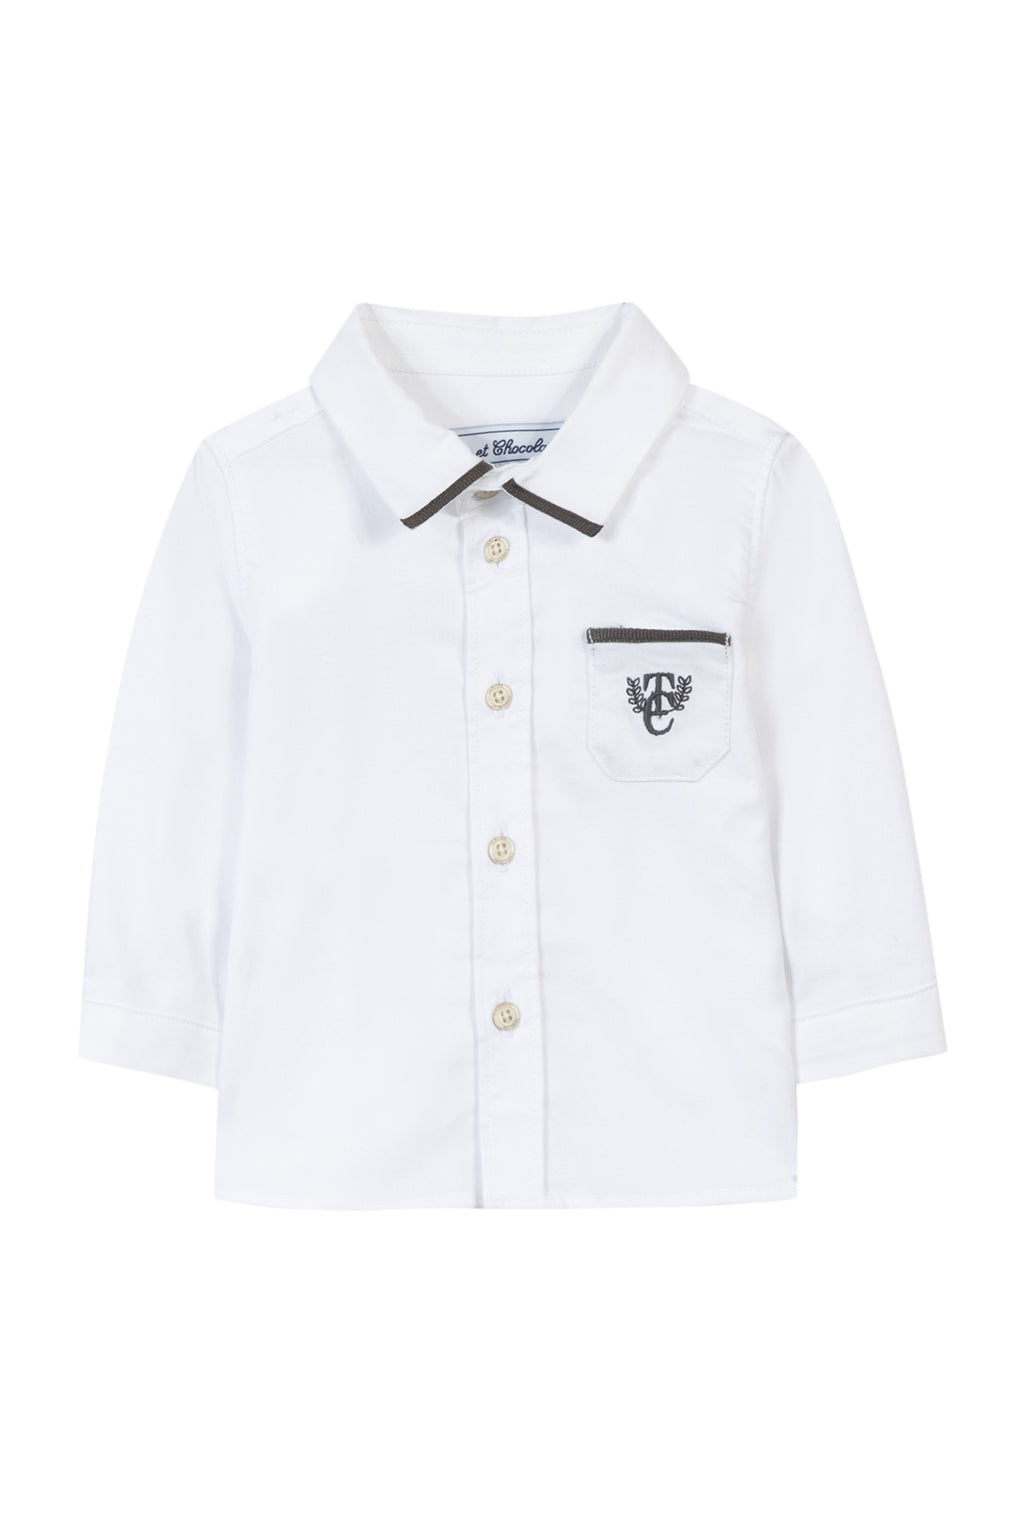 Shirt - White Poplin cotton